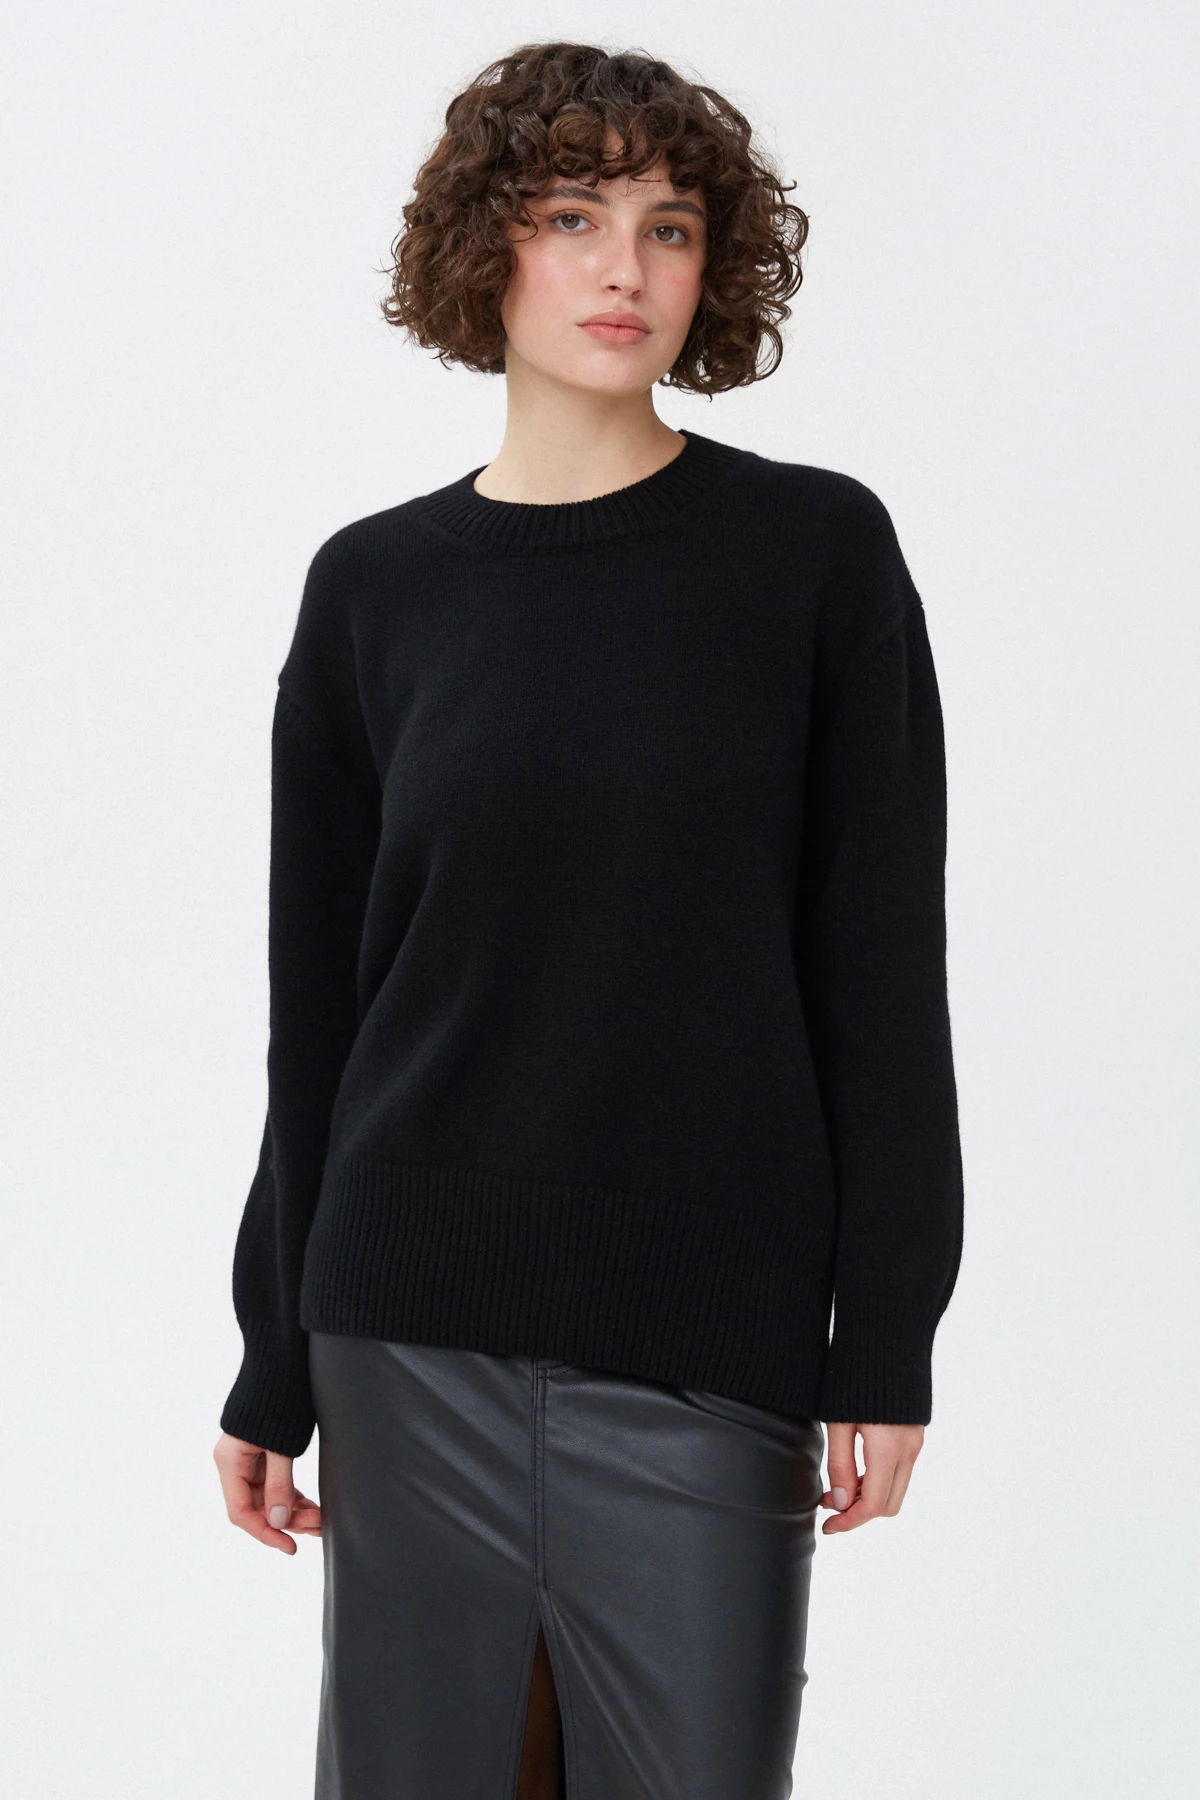 Cashmere black sweater, photo 1